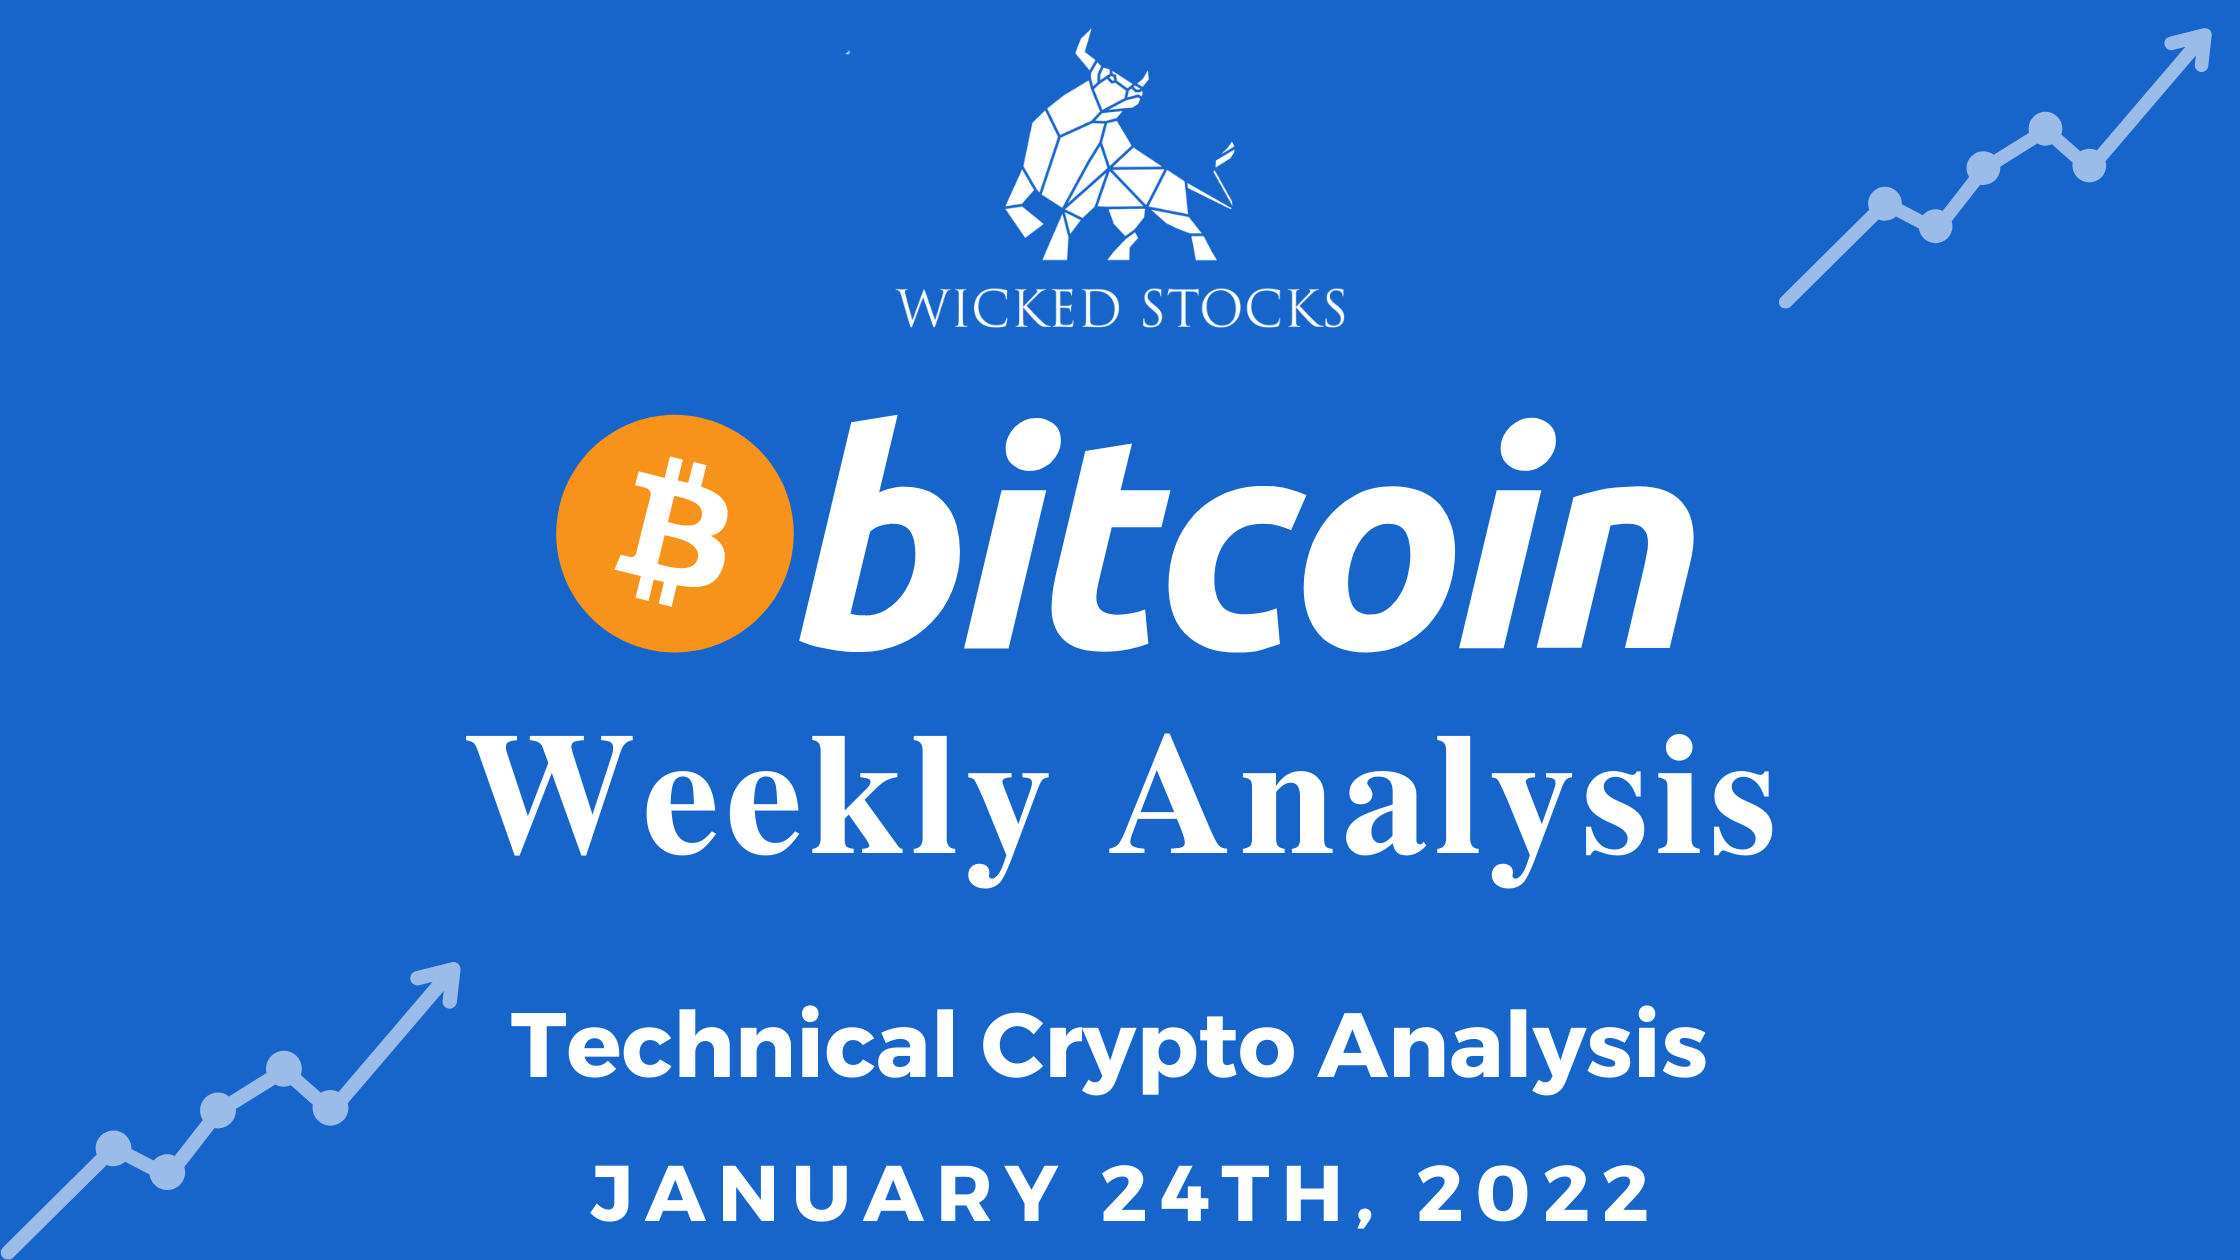 Bitcoin Weekly Analysis 1/24/22